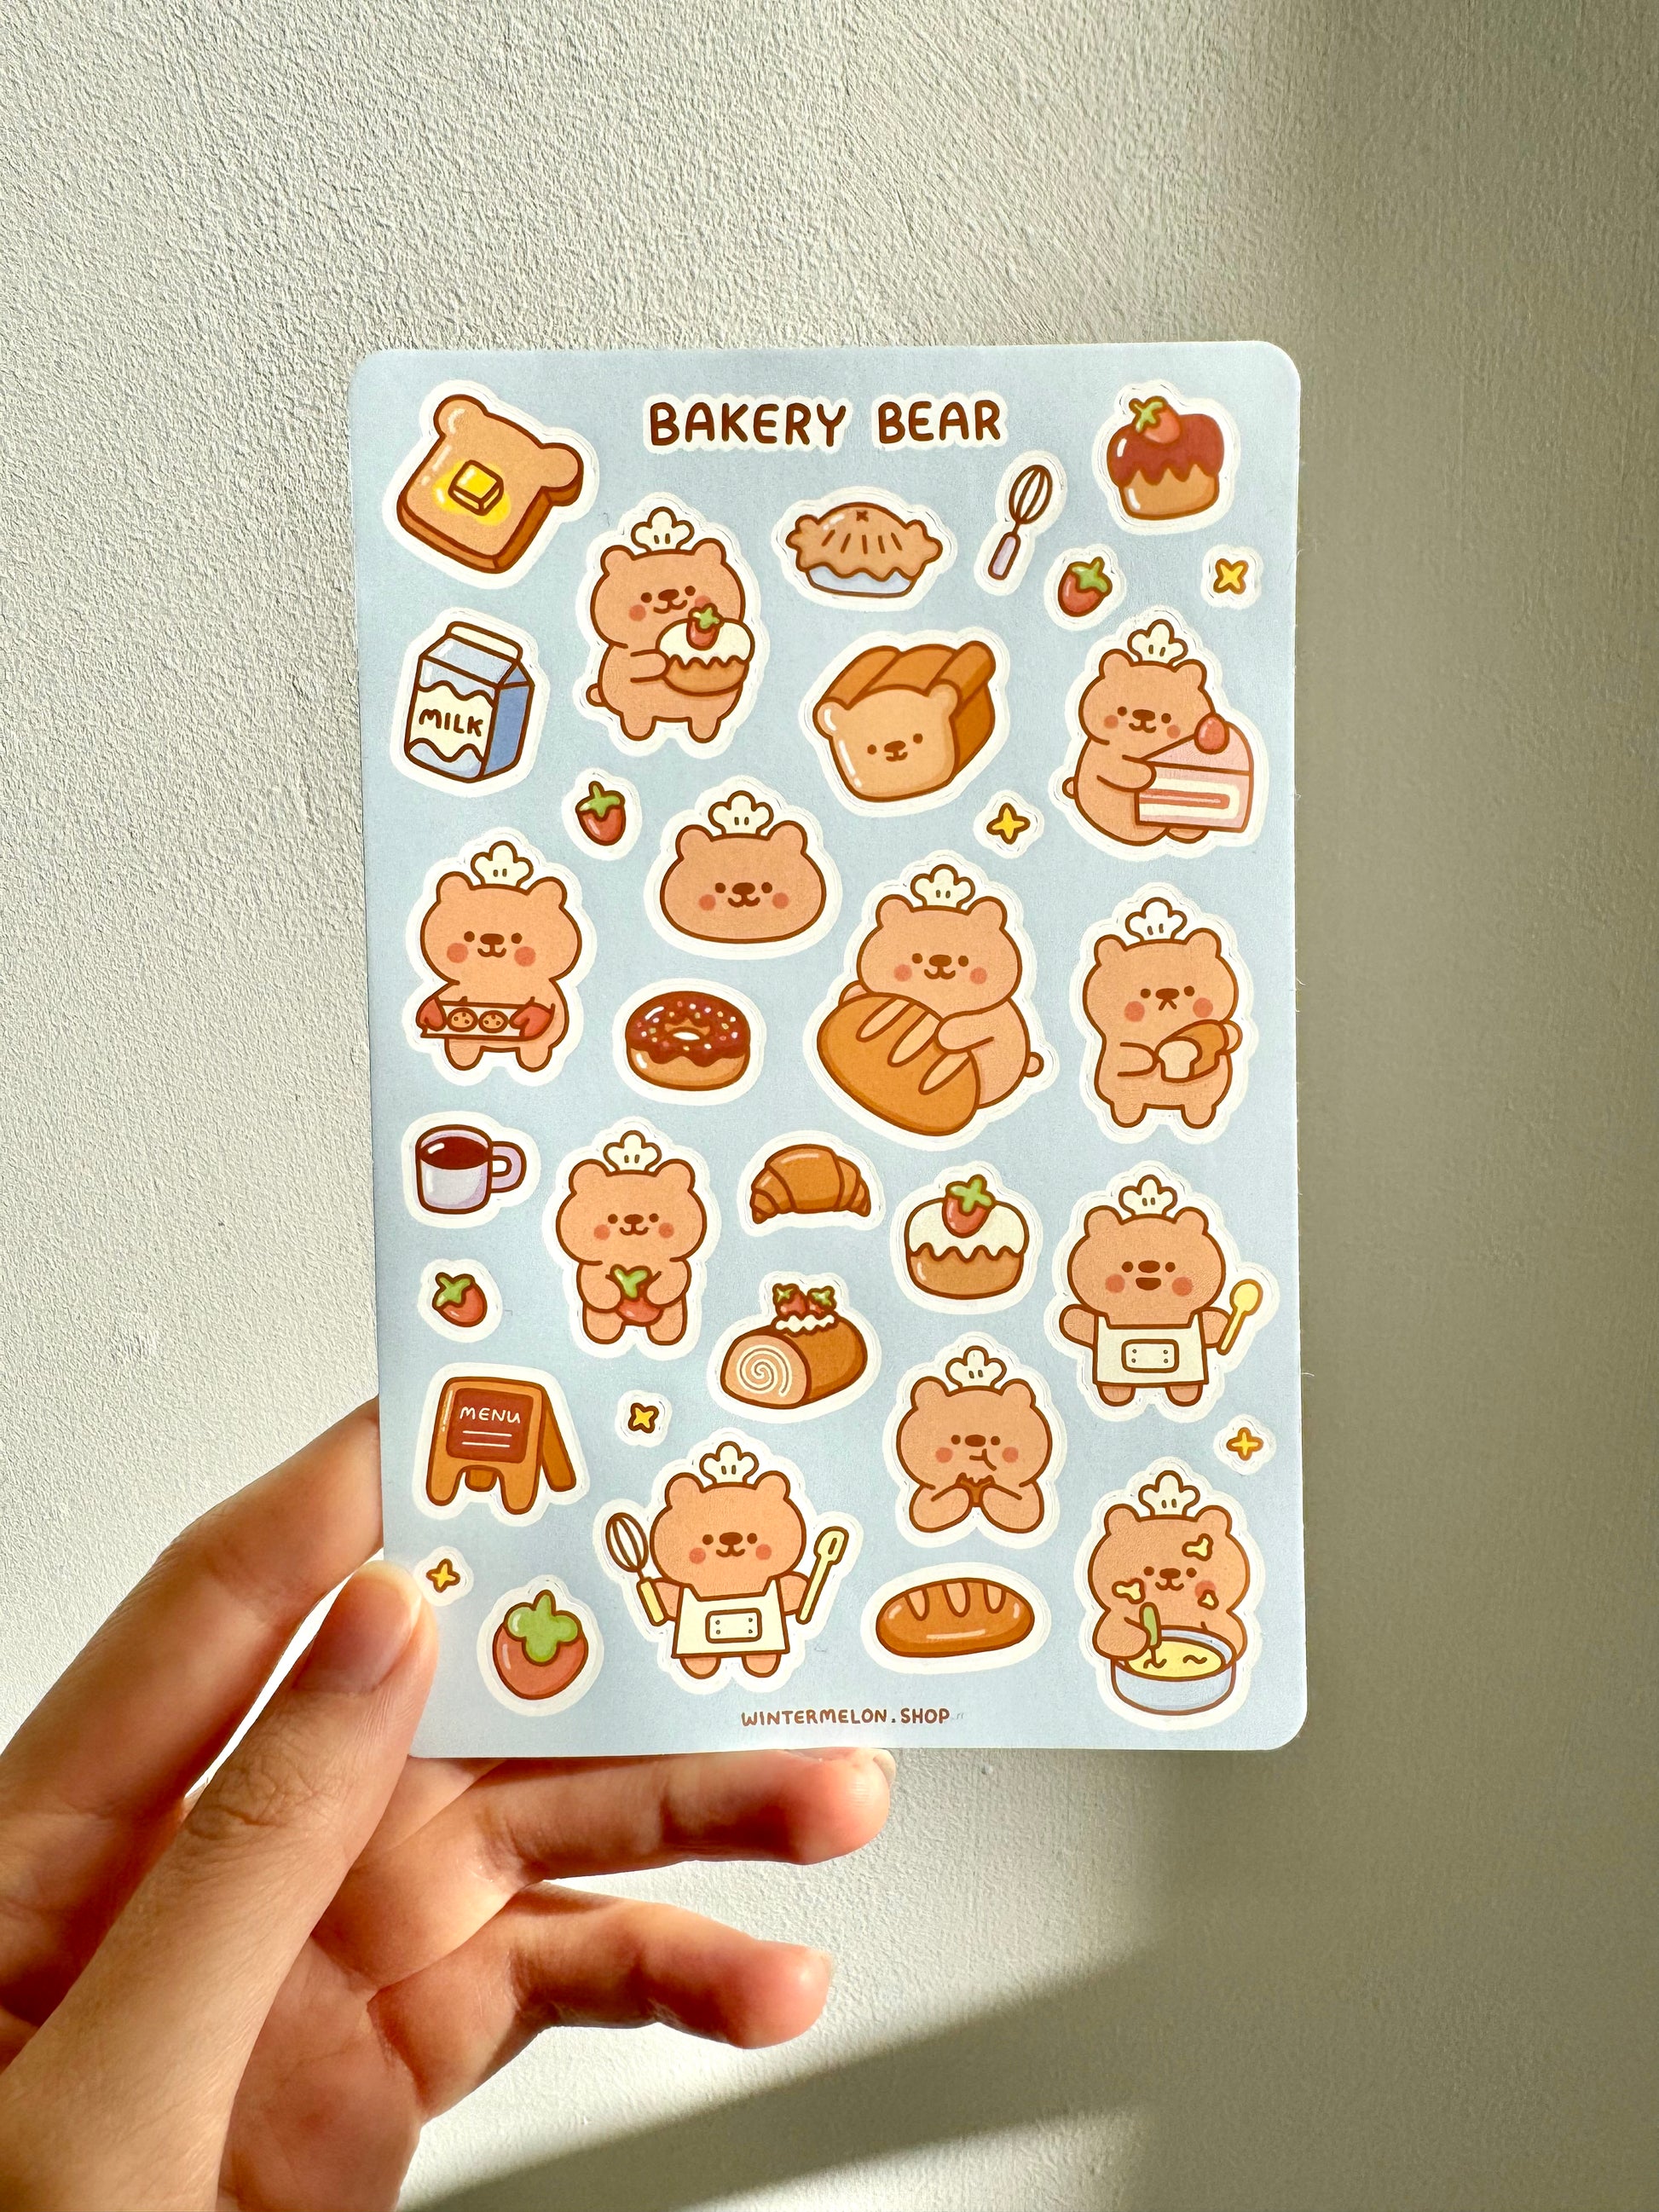 Bakery bear